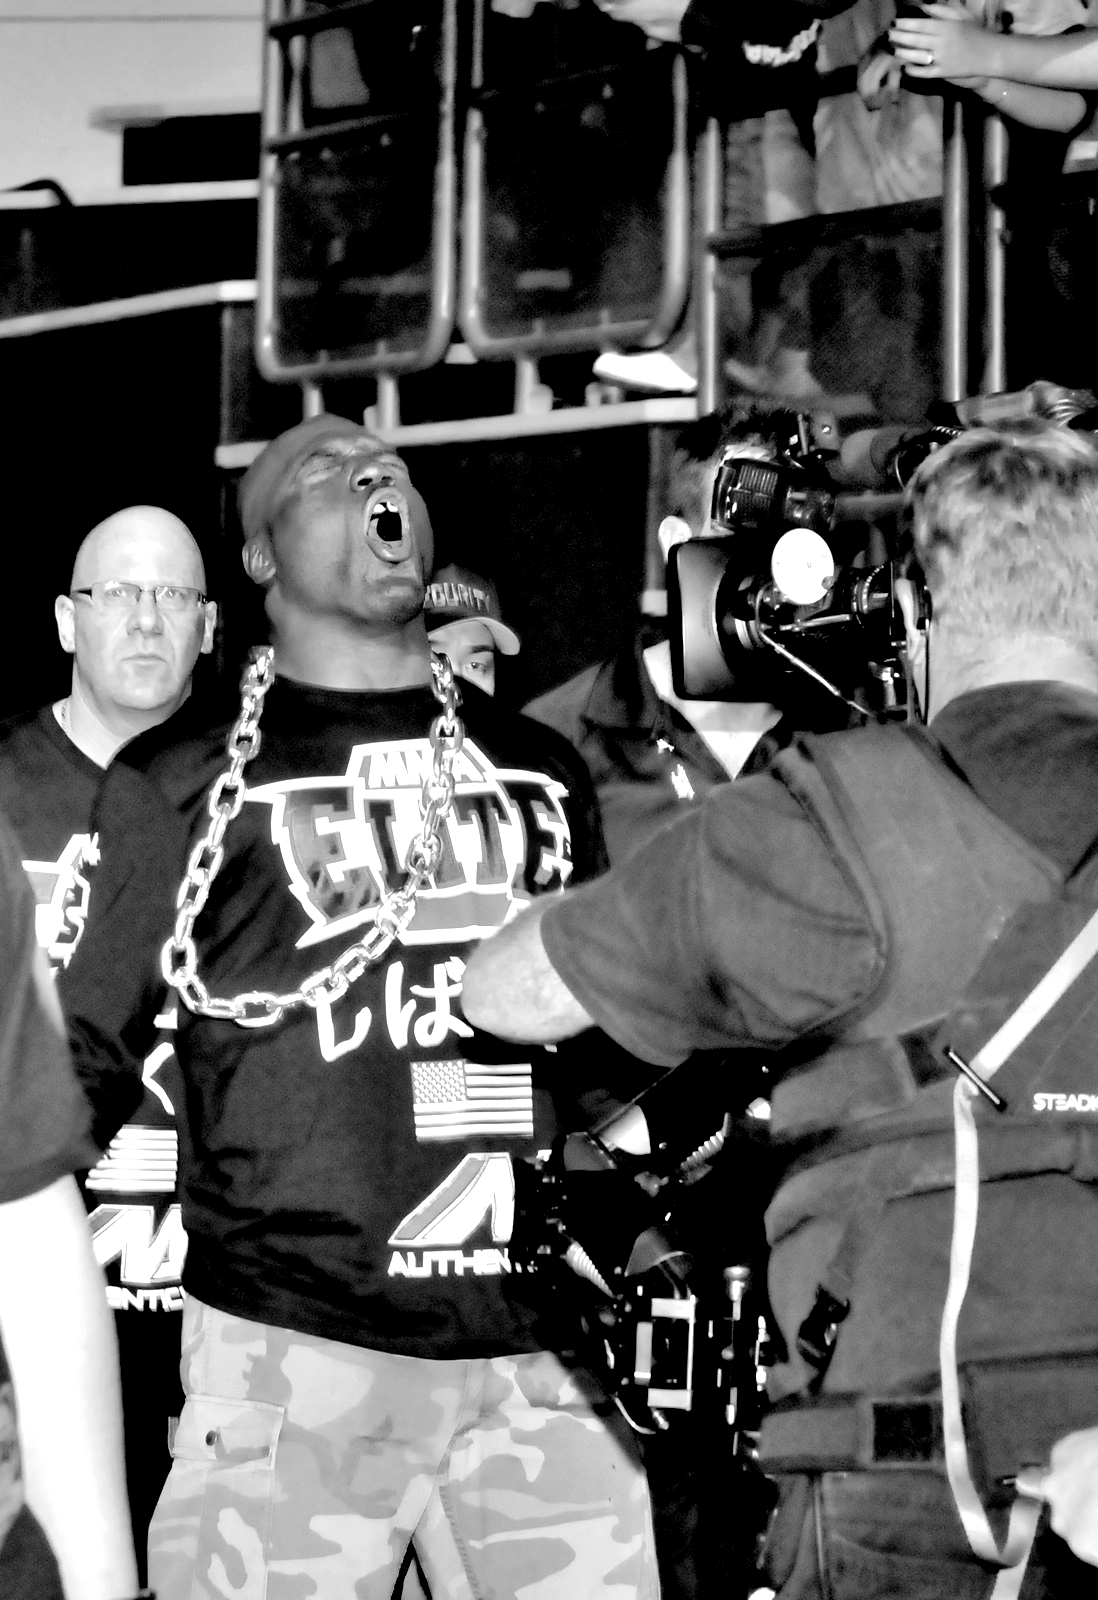 UFC老将“金刚”奇克•康勾入场前对着电视镜头模仿“金刚”的怒吼。